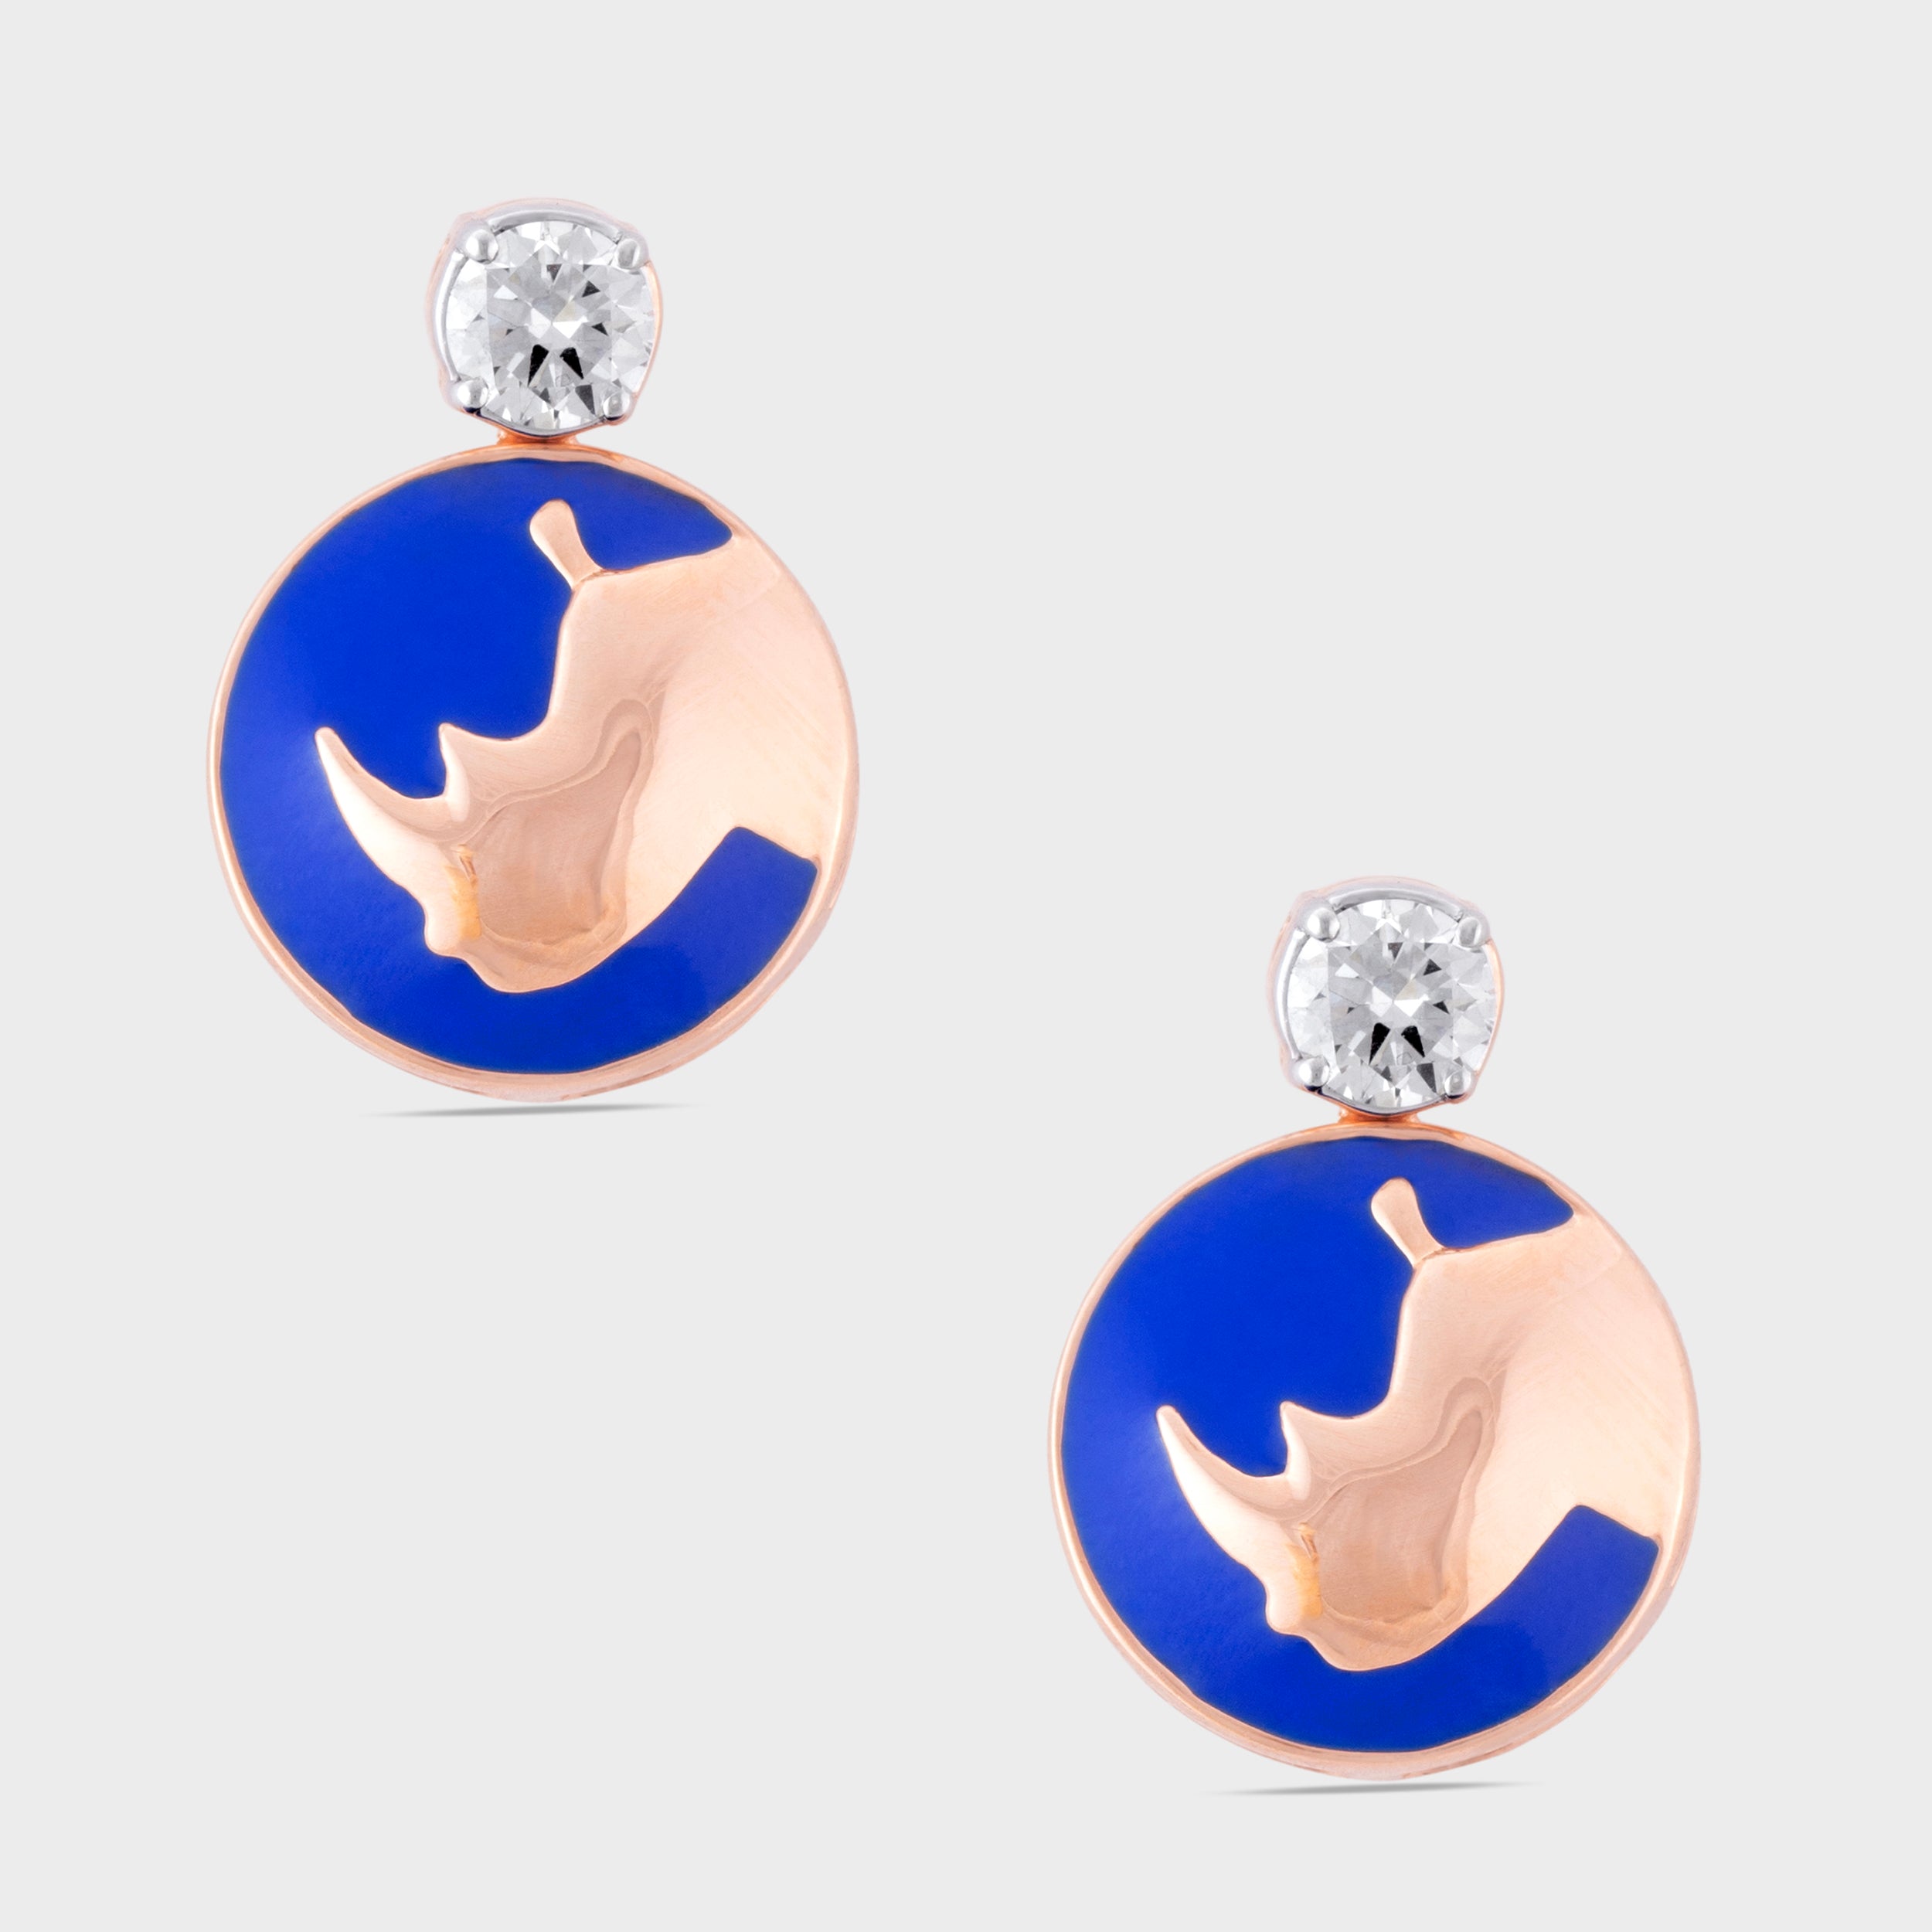 Safari Chic: Rhinoceros Motif Diamond Drop Earrings | SKU : 0019510644